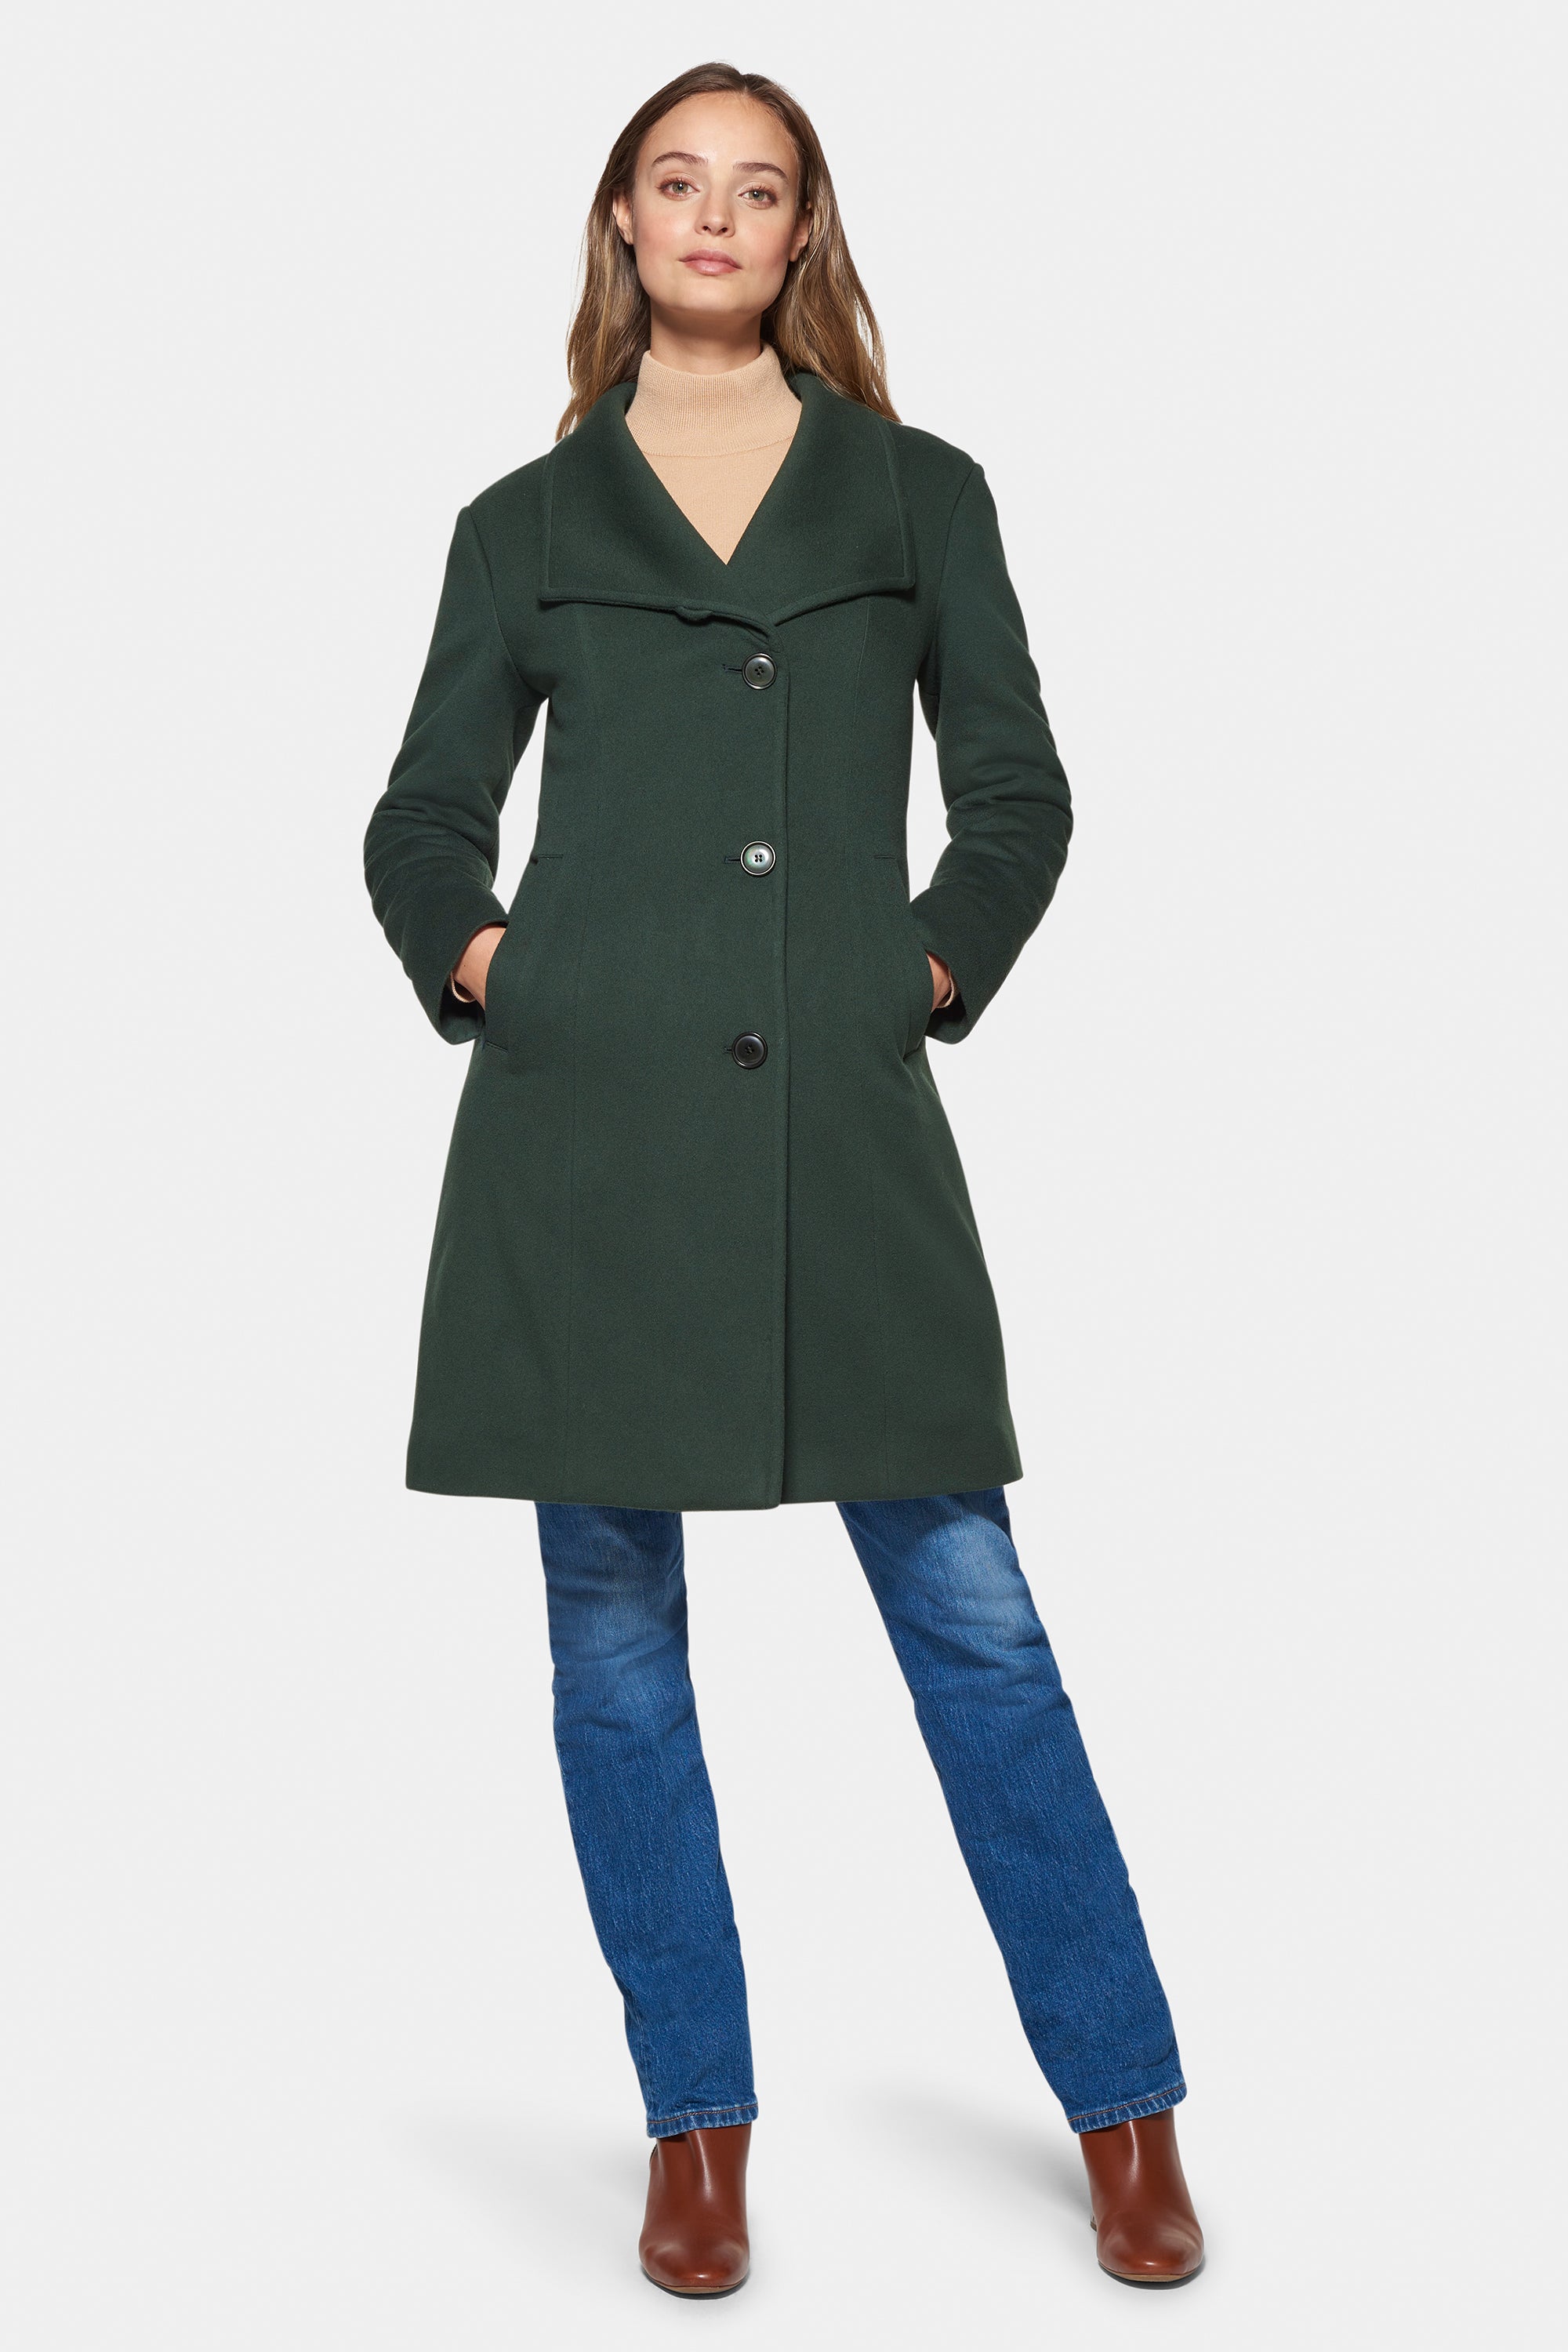 Virgin Wool City Coat, Hunter Green XS (US 0-2 / IT 38-40)